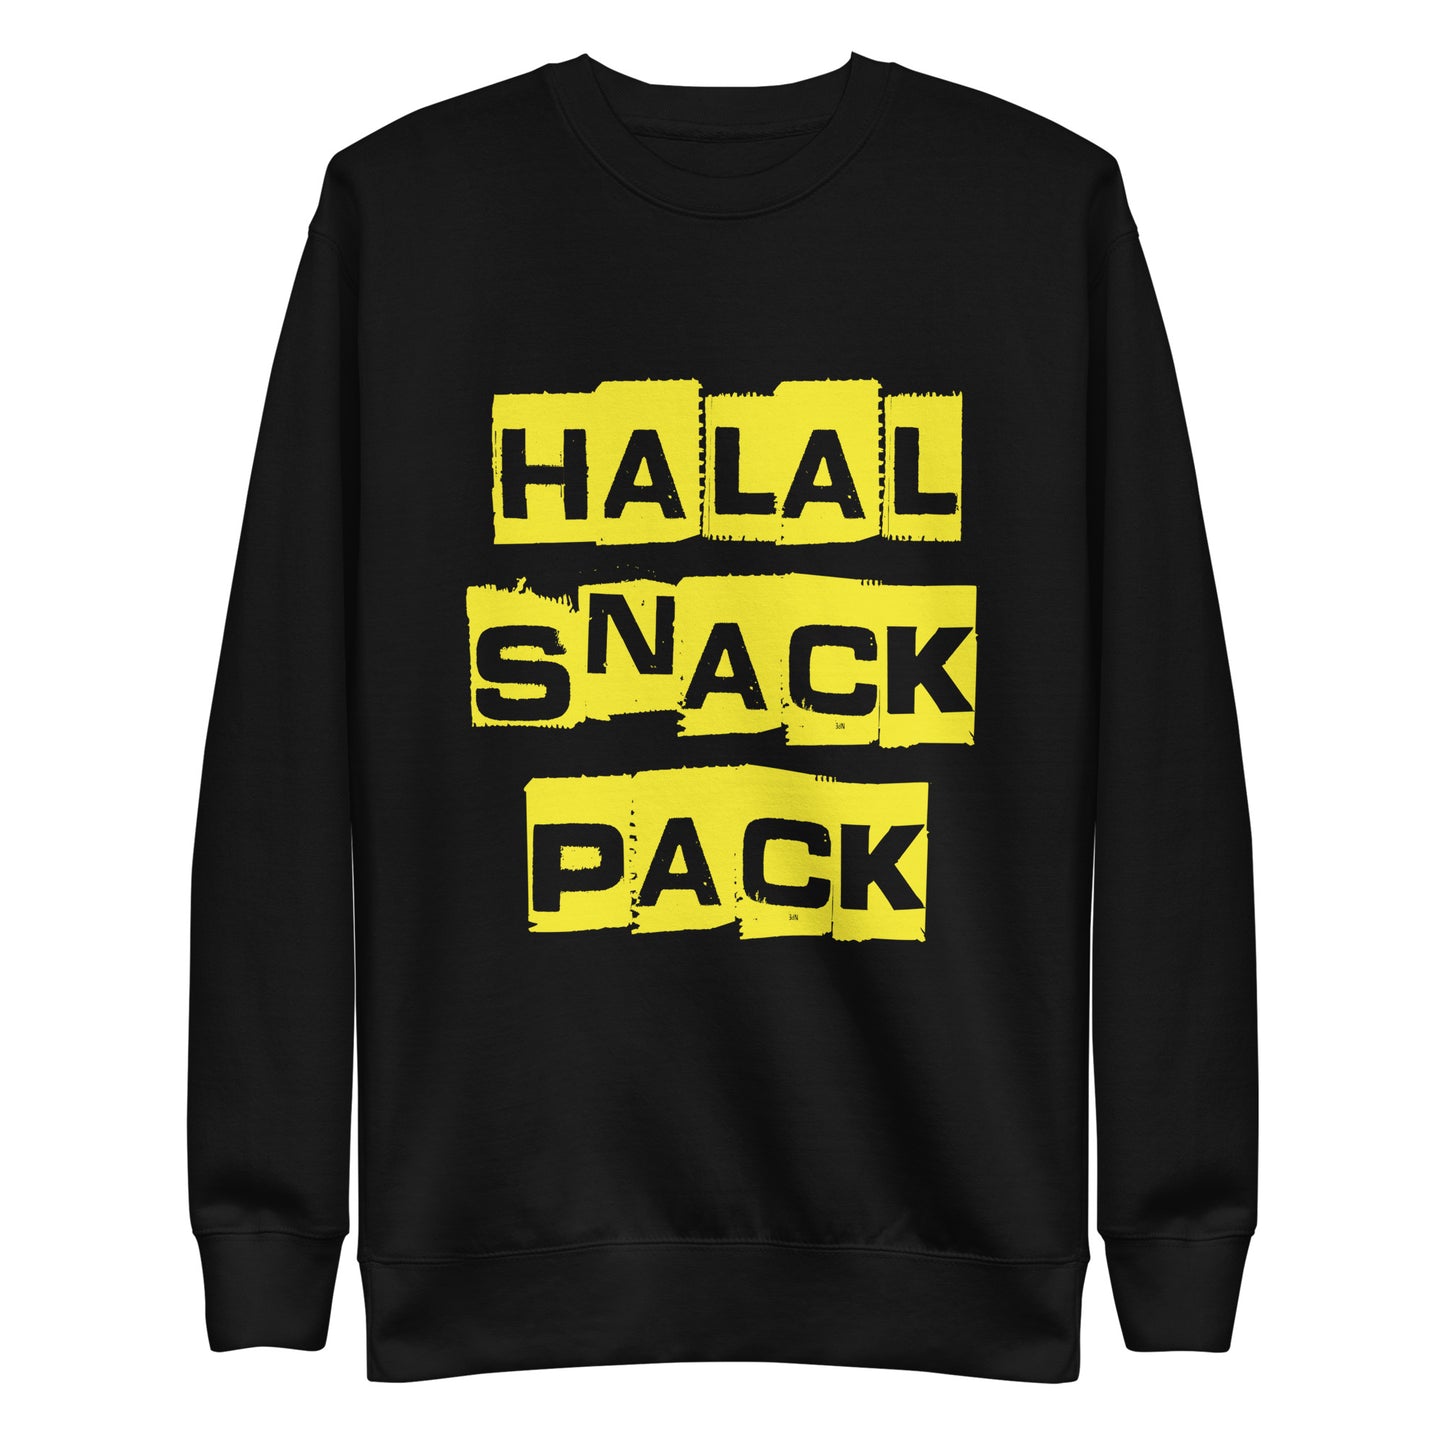 Halal Snack Pack - Sustainably Made Sweatshirt